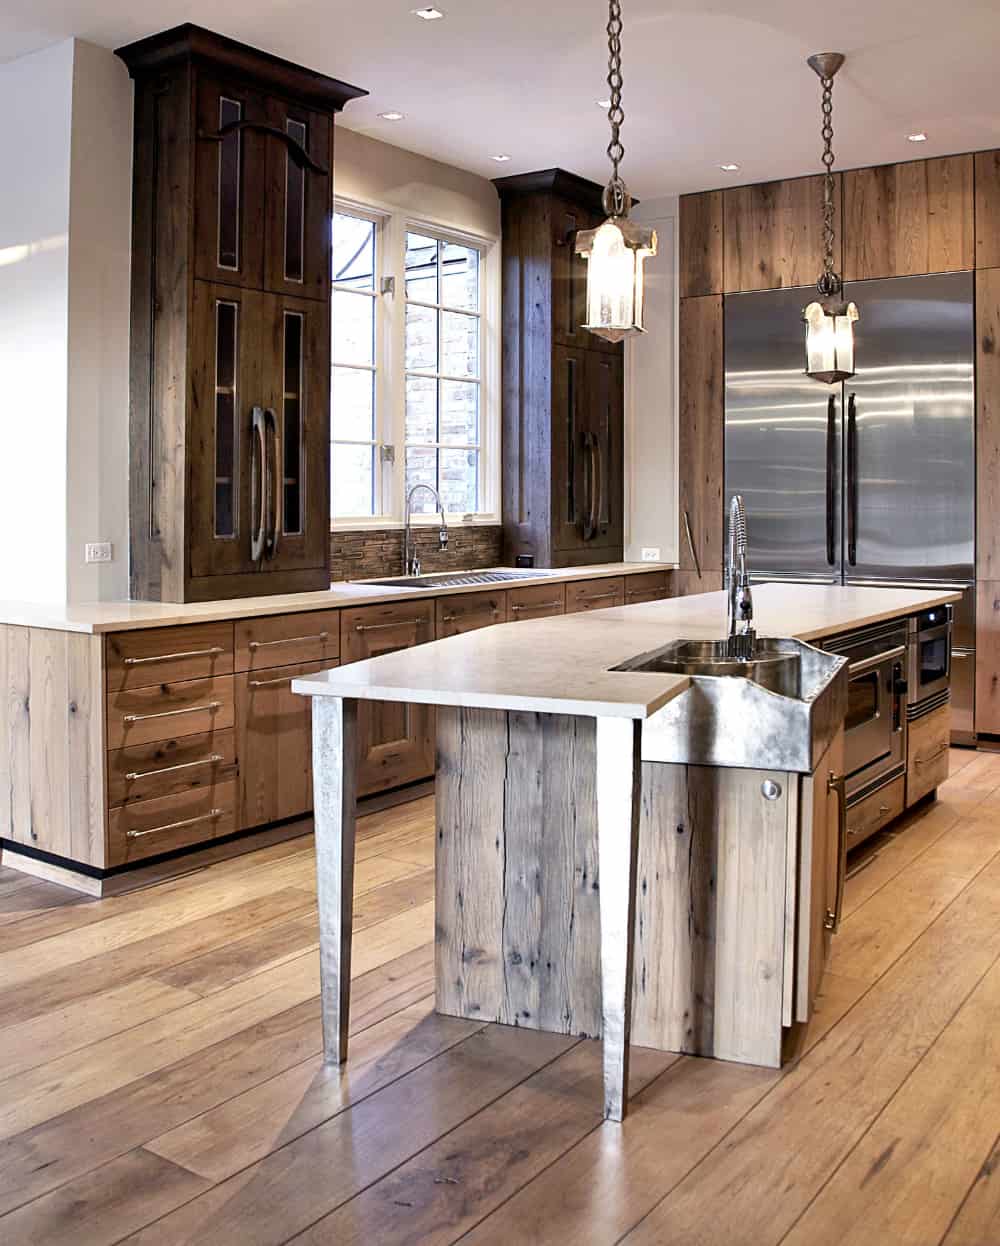 Rustic modern kitchen with an asymmetric angular island